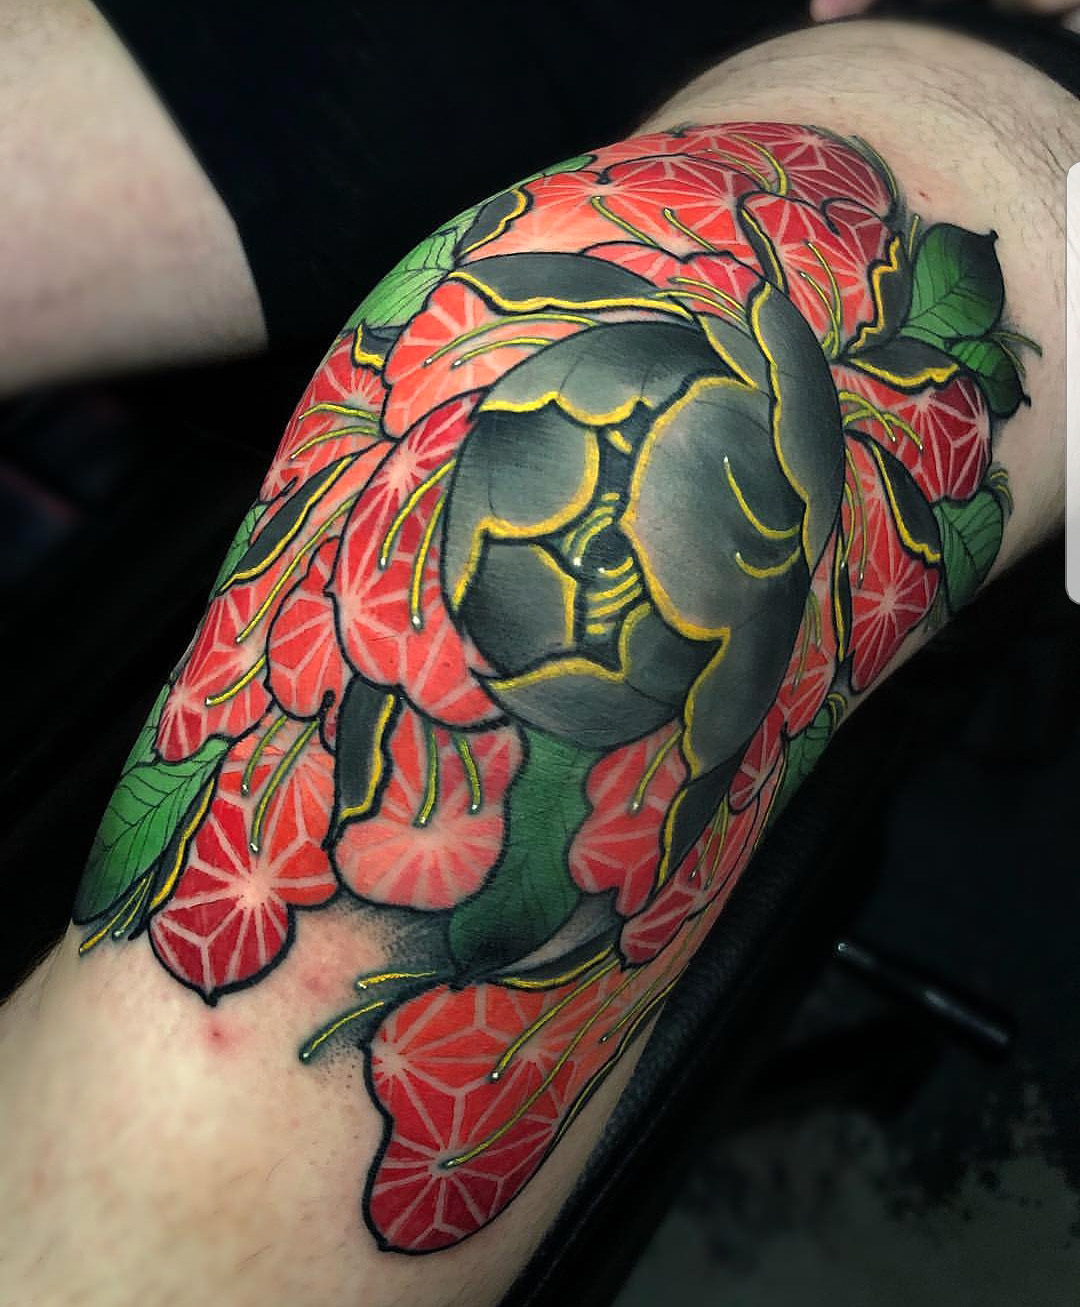 Peony knee with a couple healed tattoos too              torontotattoo tattooartist tattoo traditionaltattoo  Instagram